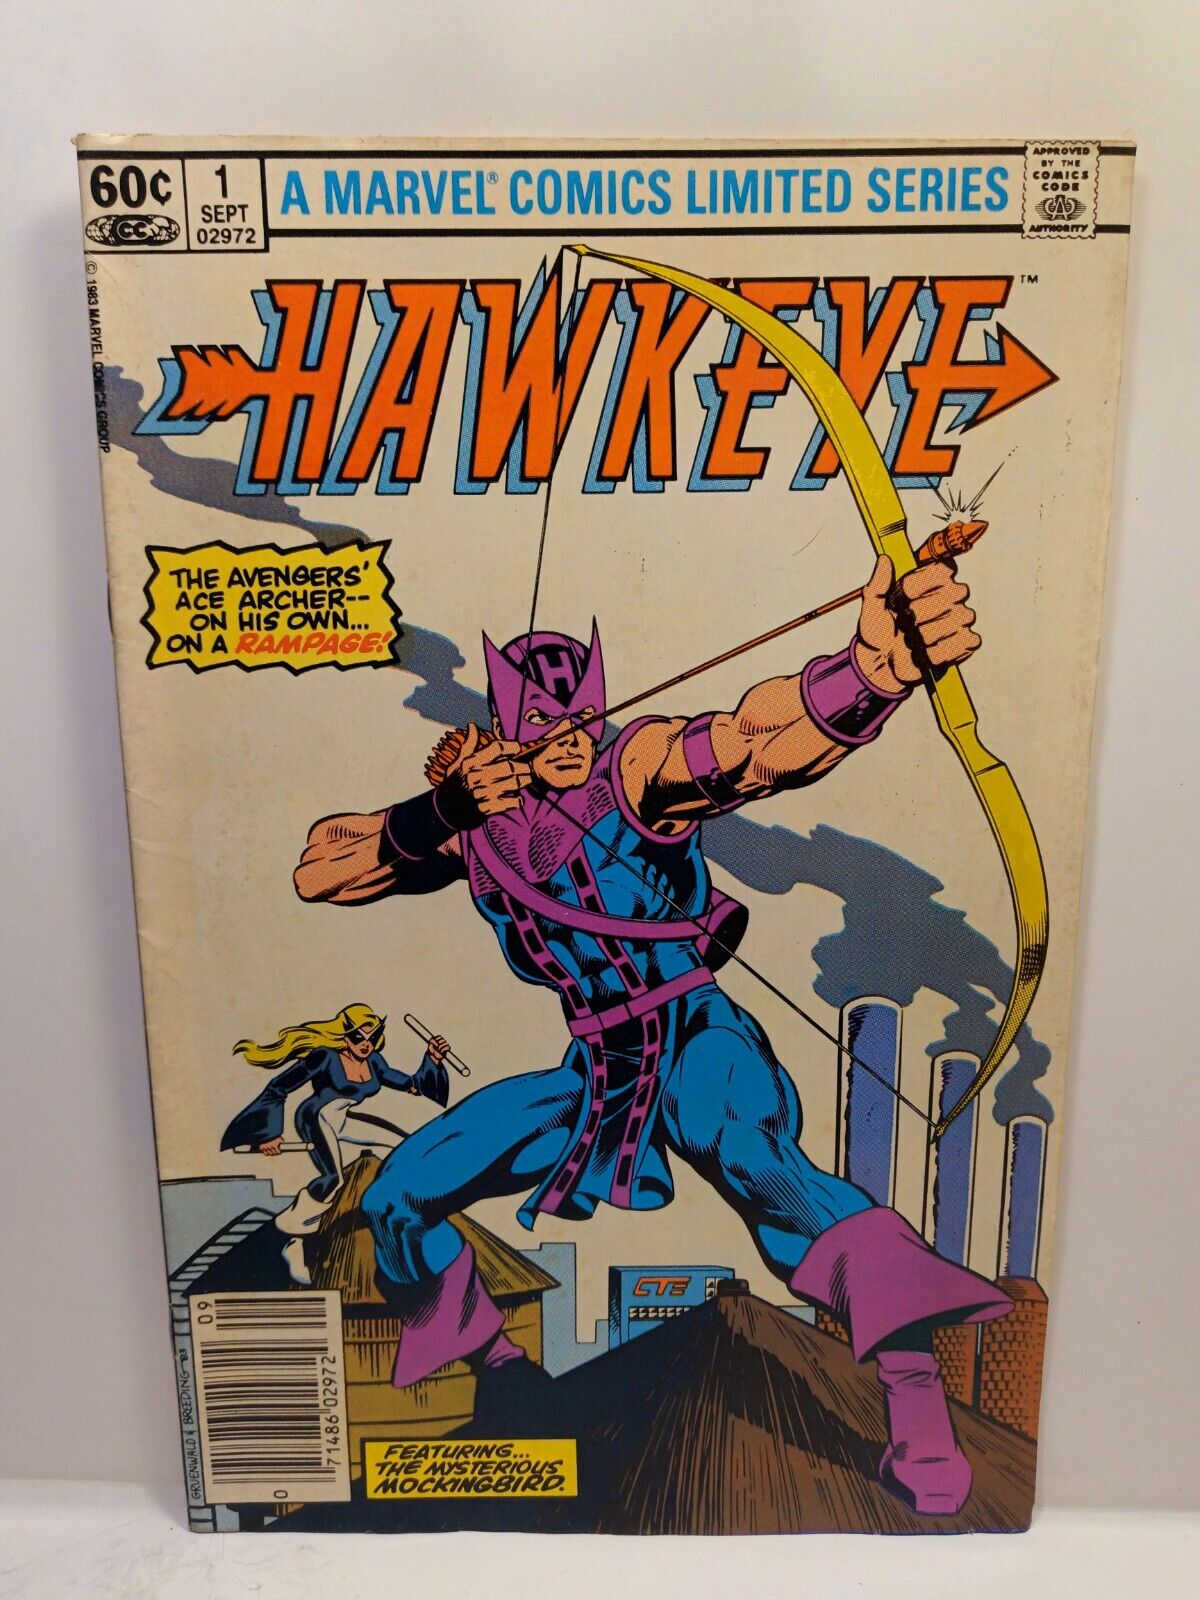 HAWKEYE #1 On a Rampage Marvel Comic Book